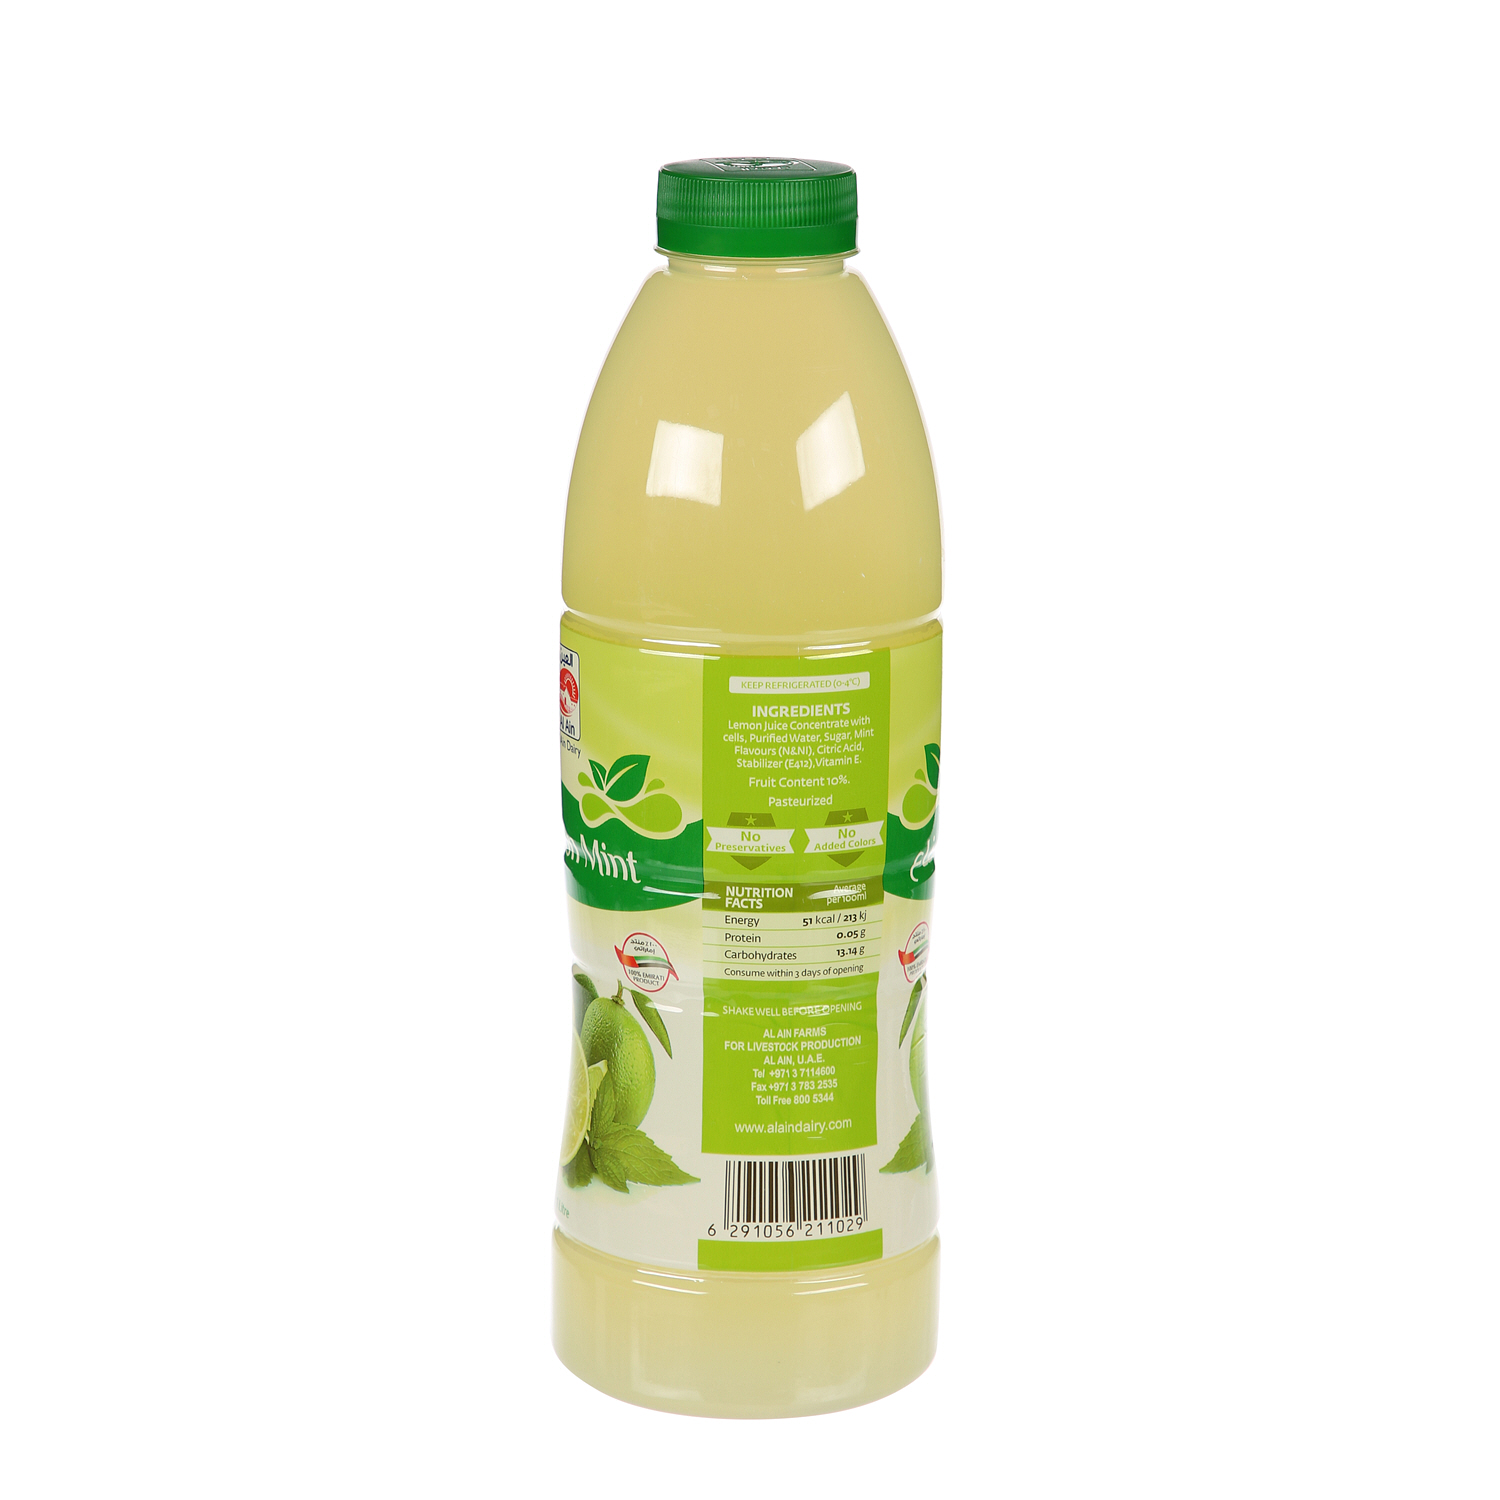 Al Ain Lemon Mint Drink 1 L